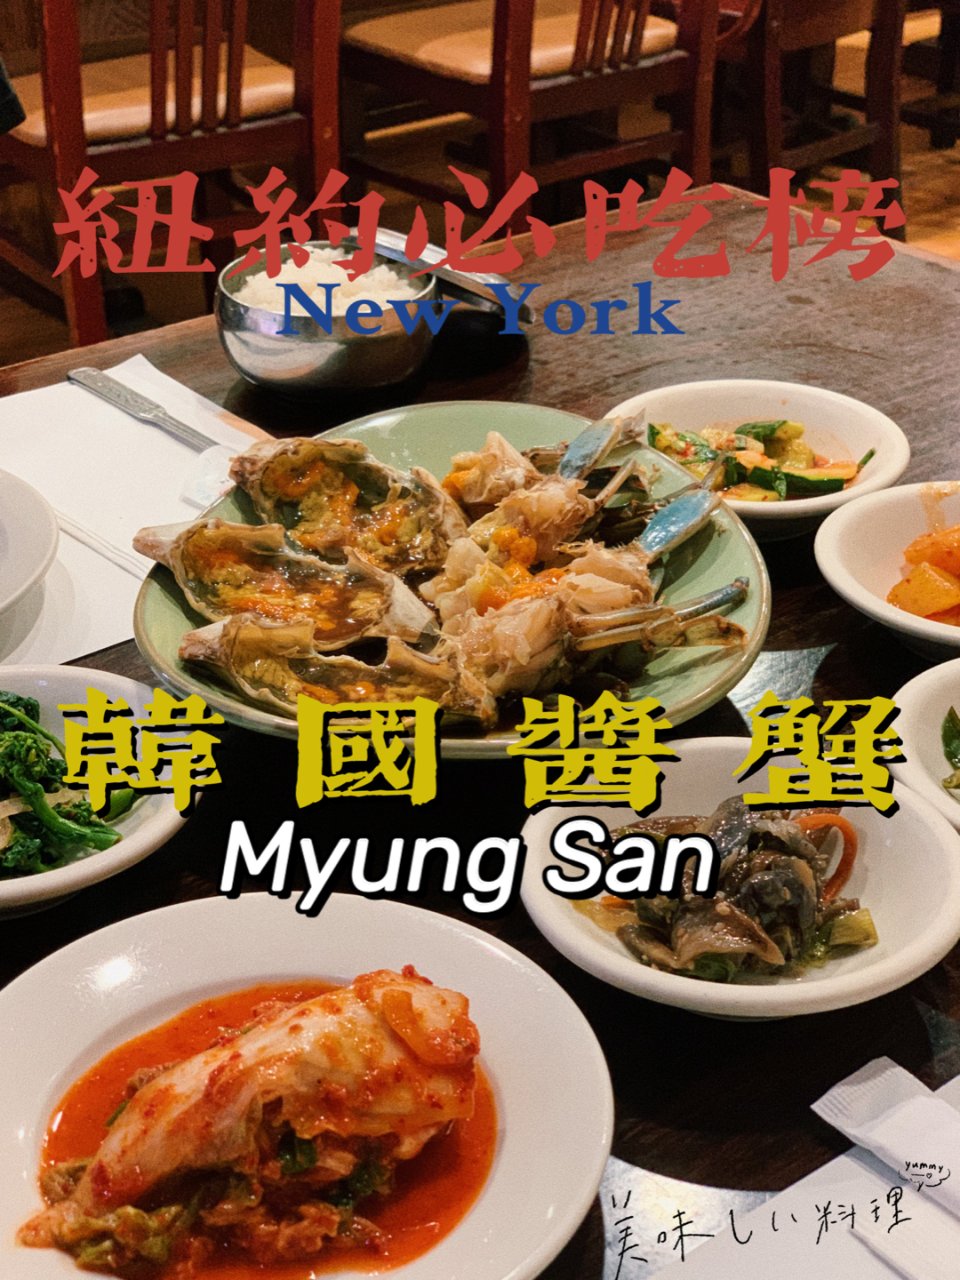 Myung San